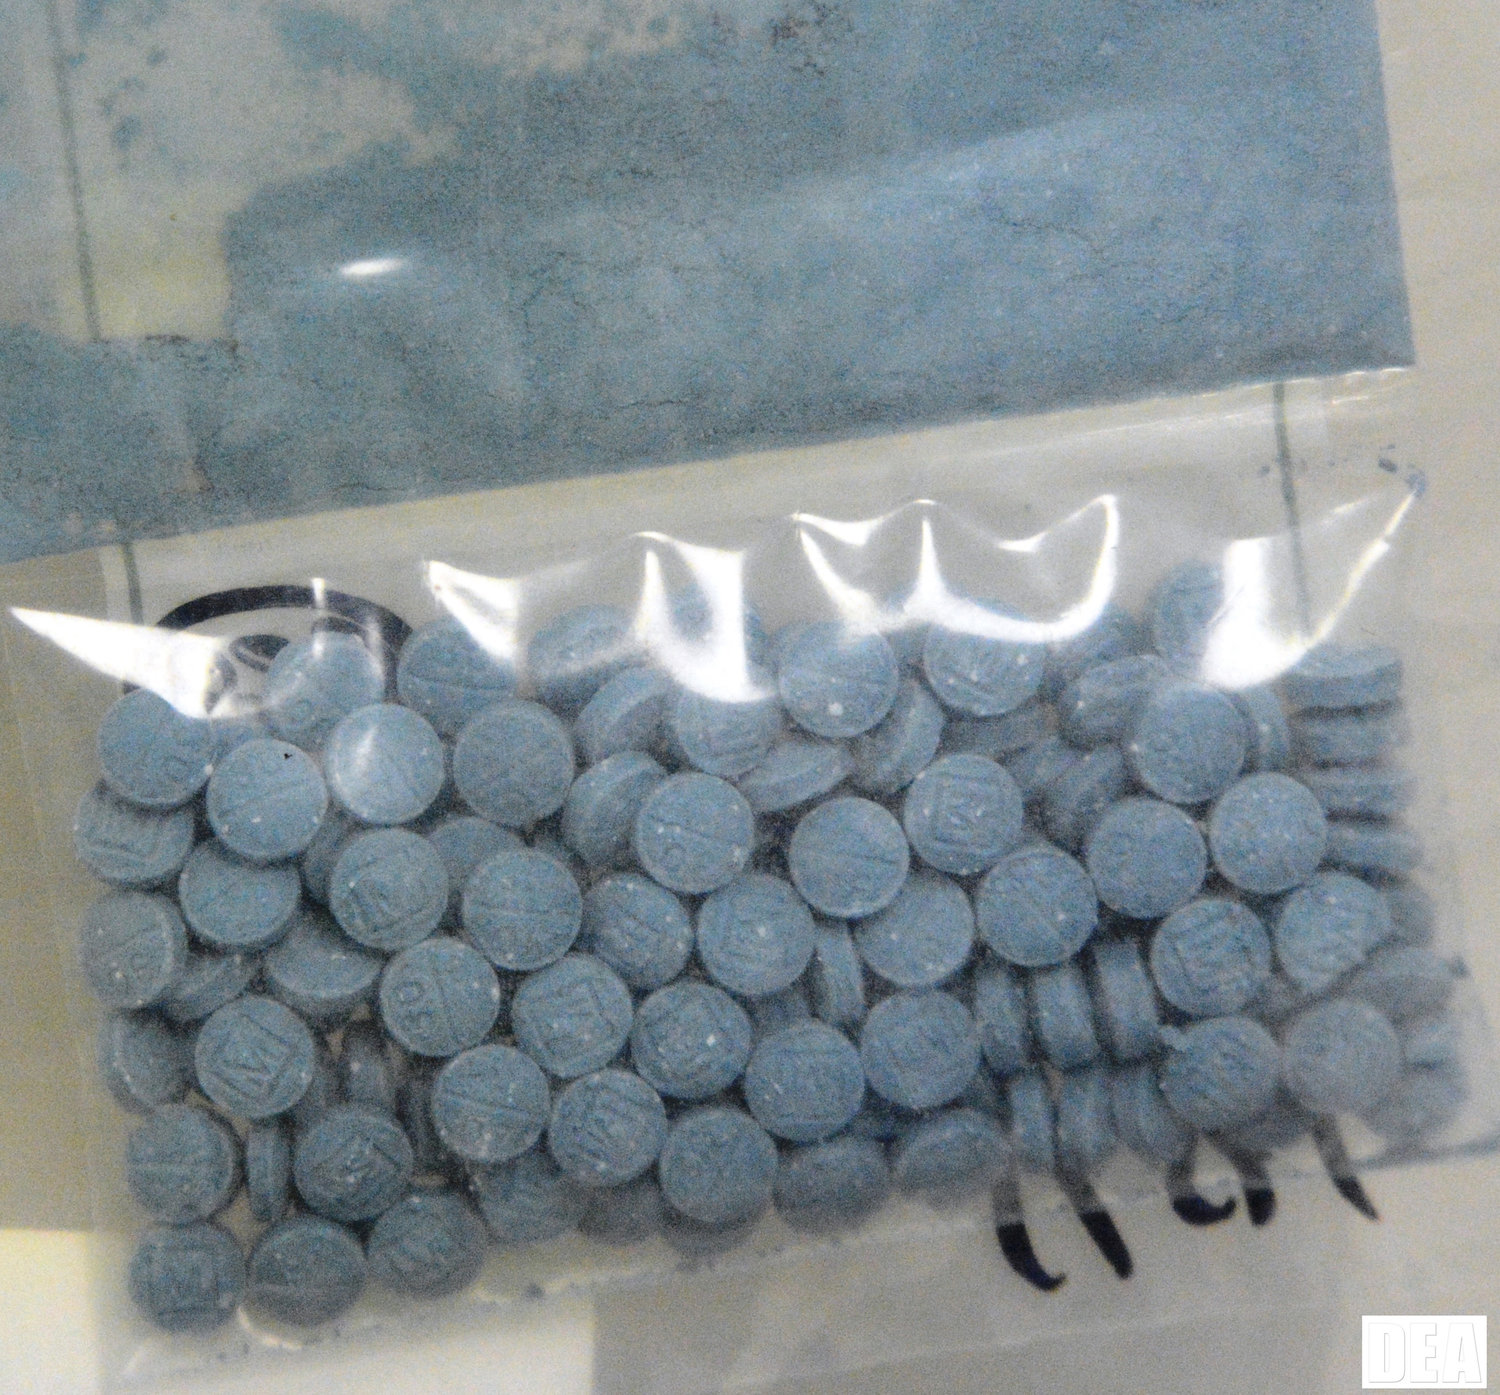 A bag of heroin fentanyl pills, as seen on July 2, 2018. (U.S. Drug Enforcement Administration)